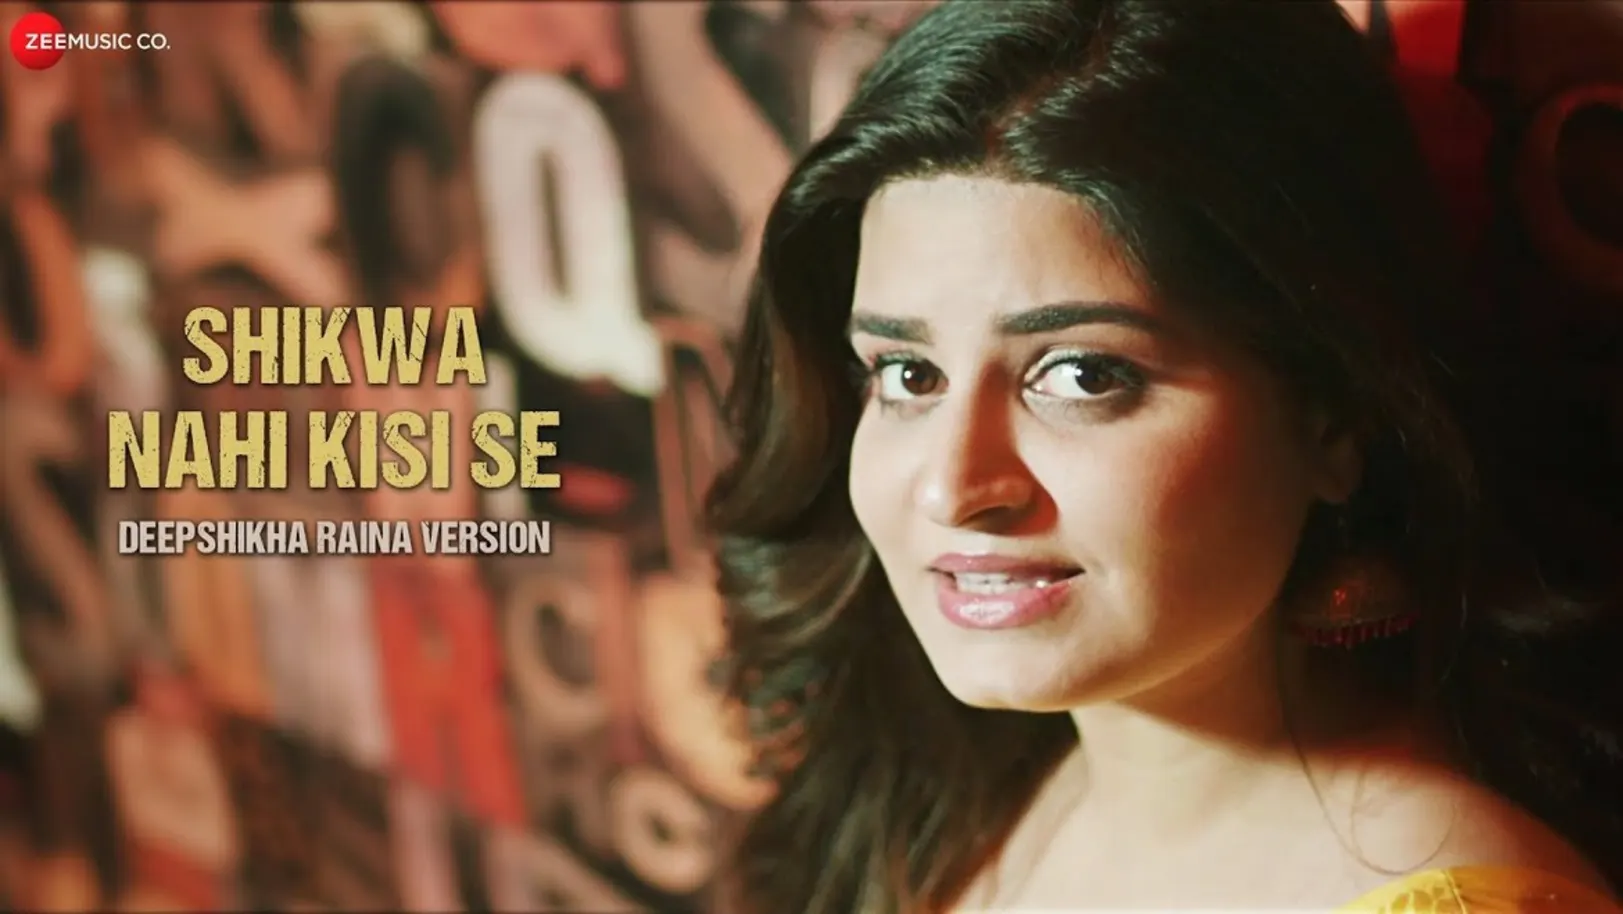 Shikwa Nahi Kisi Se - official music video | Deepshikha Raina 